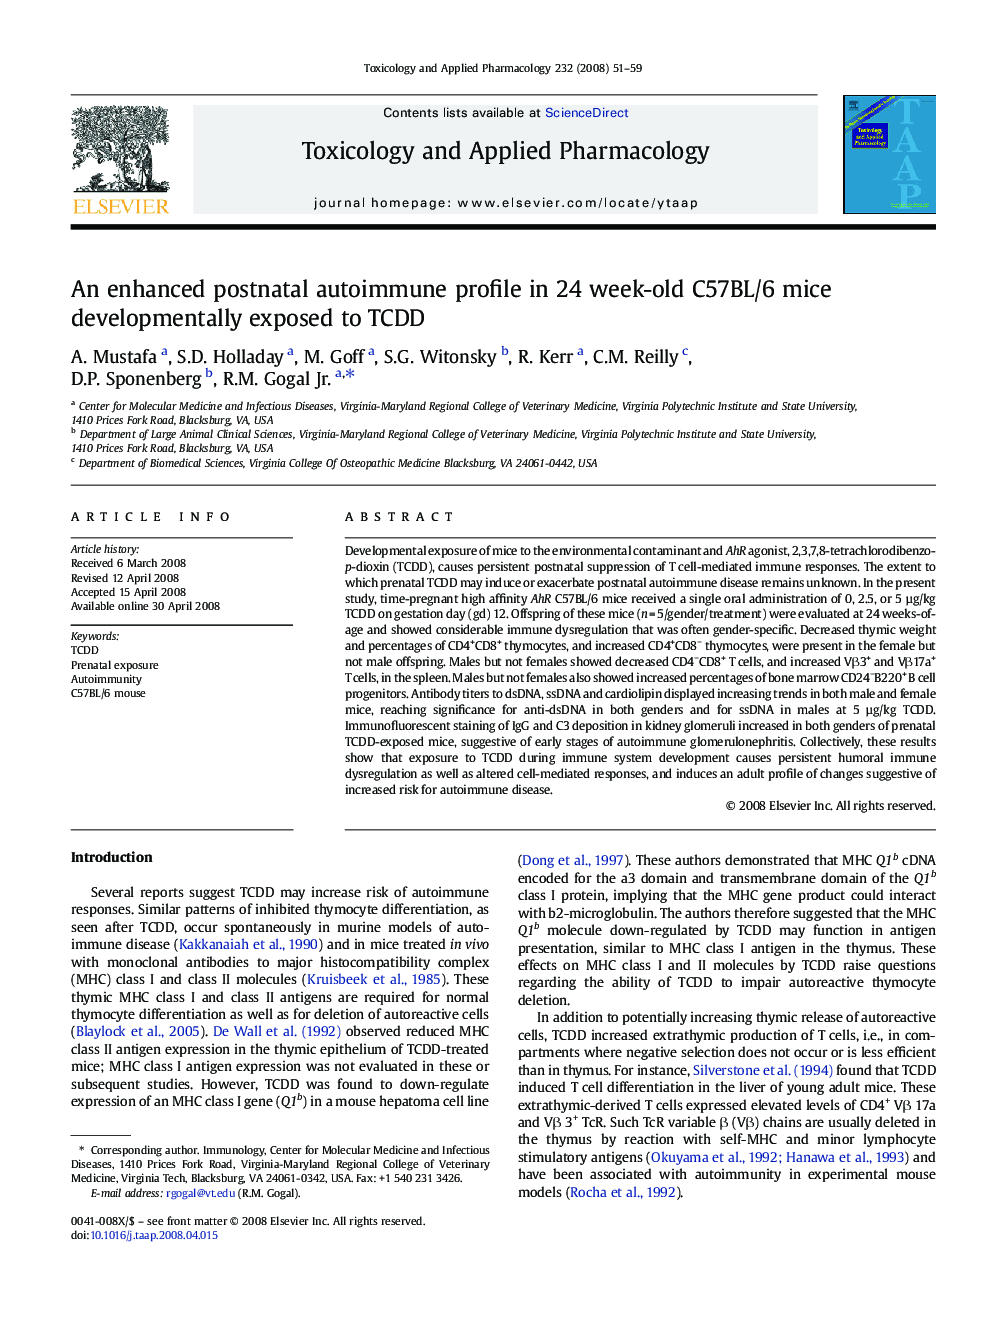 An enhanced postnatal autoimmune profile in 24 week-old C57BL/6 mice developmentally exposed to TCDD